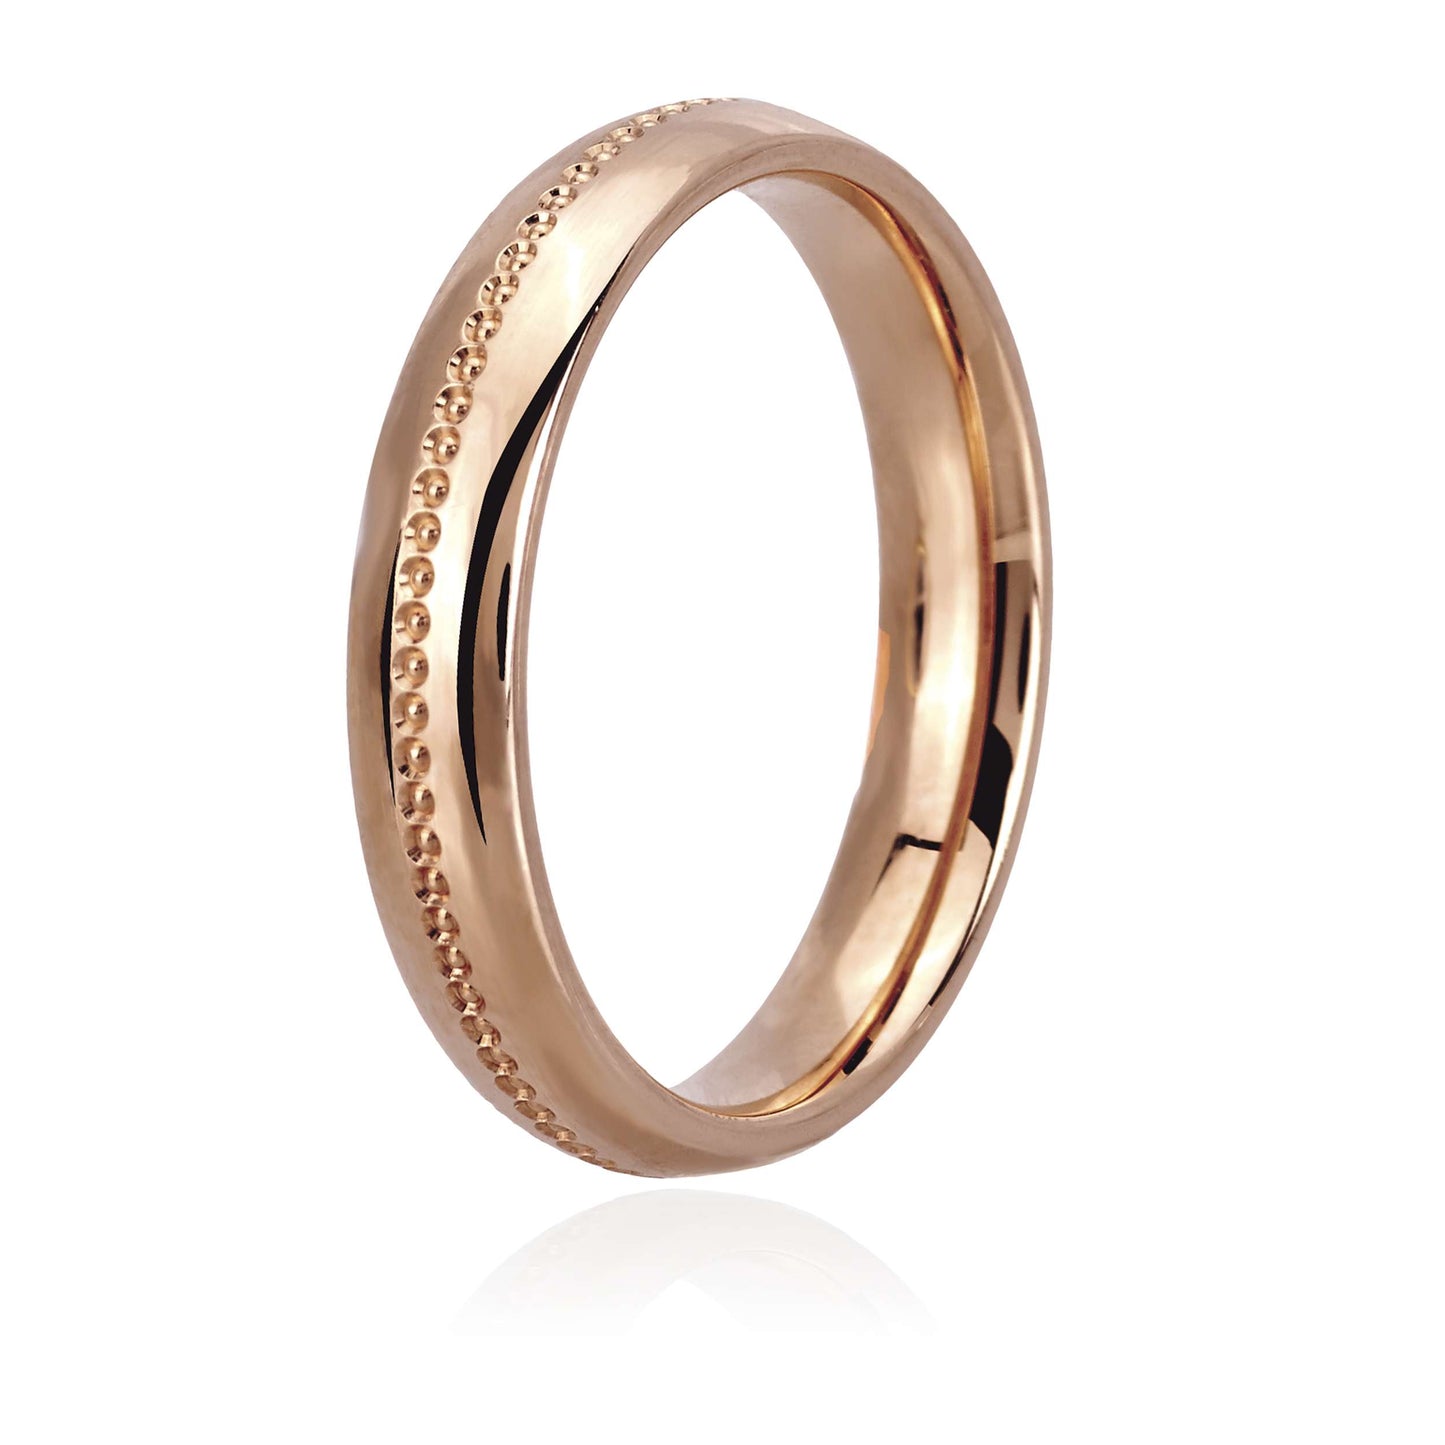 18kt gold fantasy comfort ring 4mm